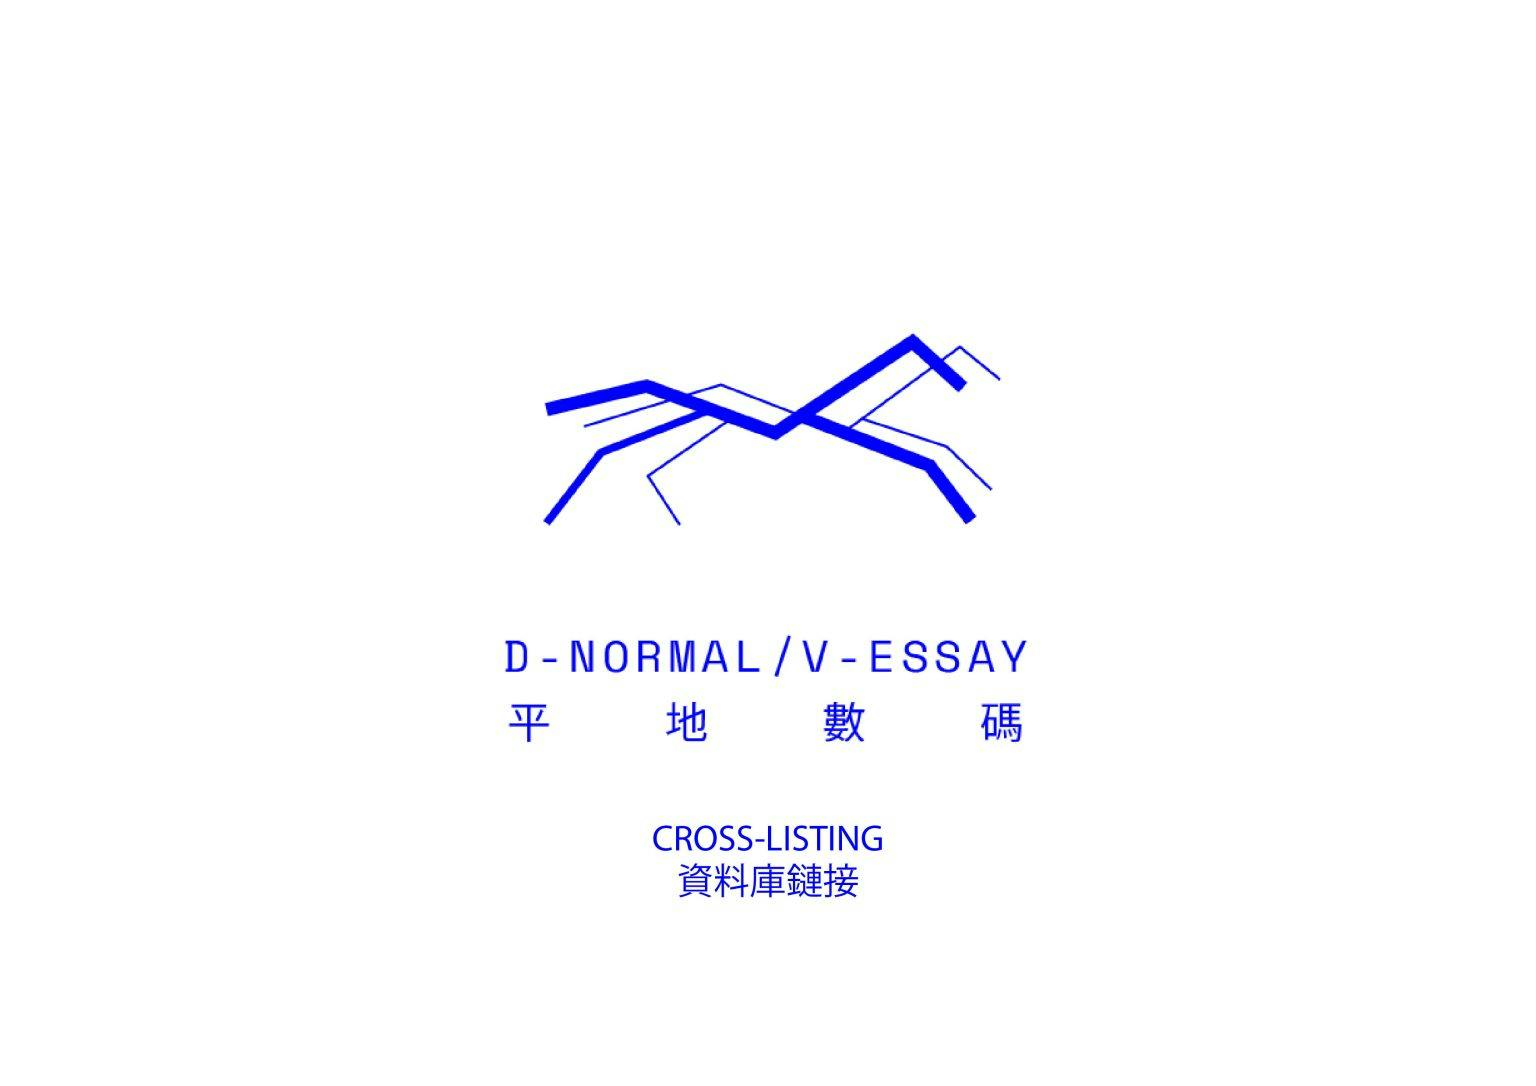 Cross-listing: D-Normal/V-Essay 資料庫鏈接：平地數碼